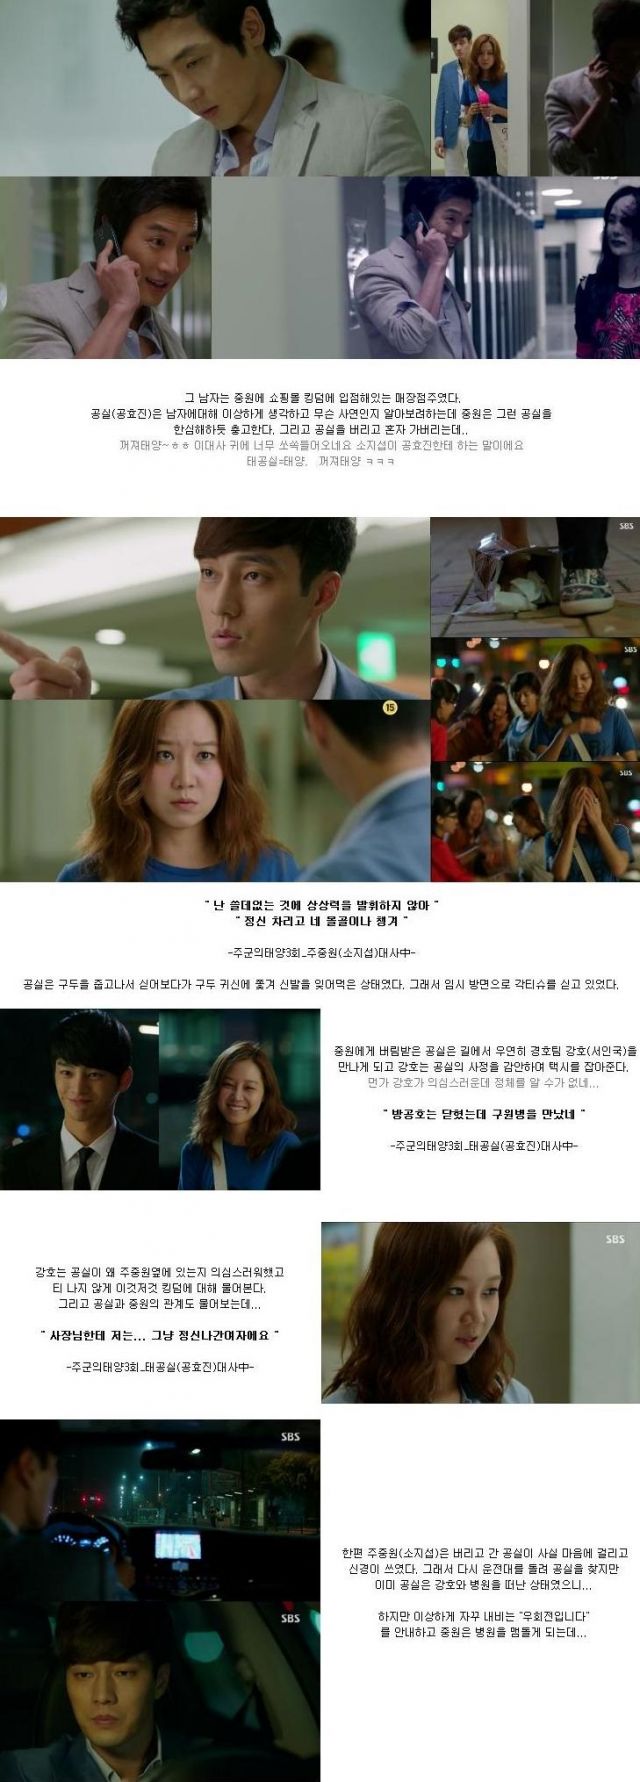 episode 3 captures for the Korean drama 'Master's Sun'